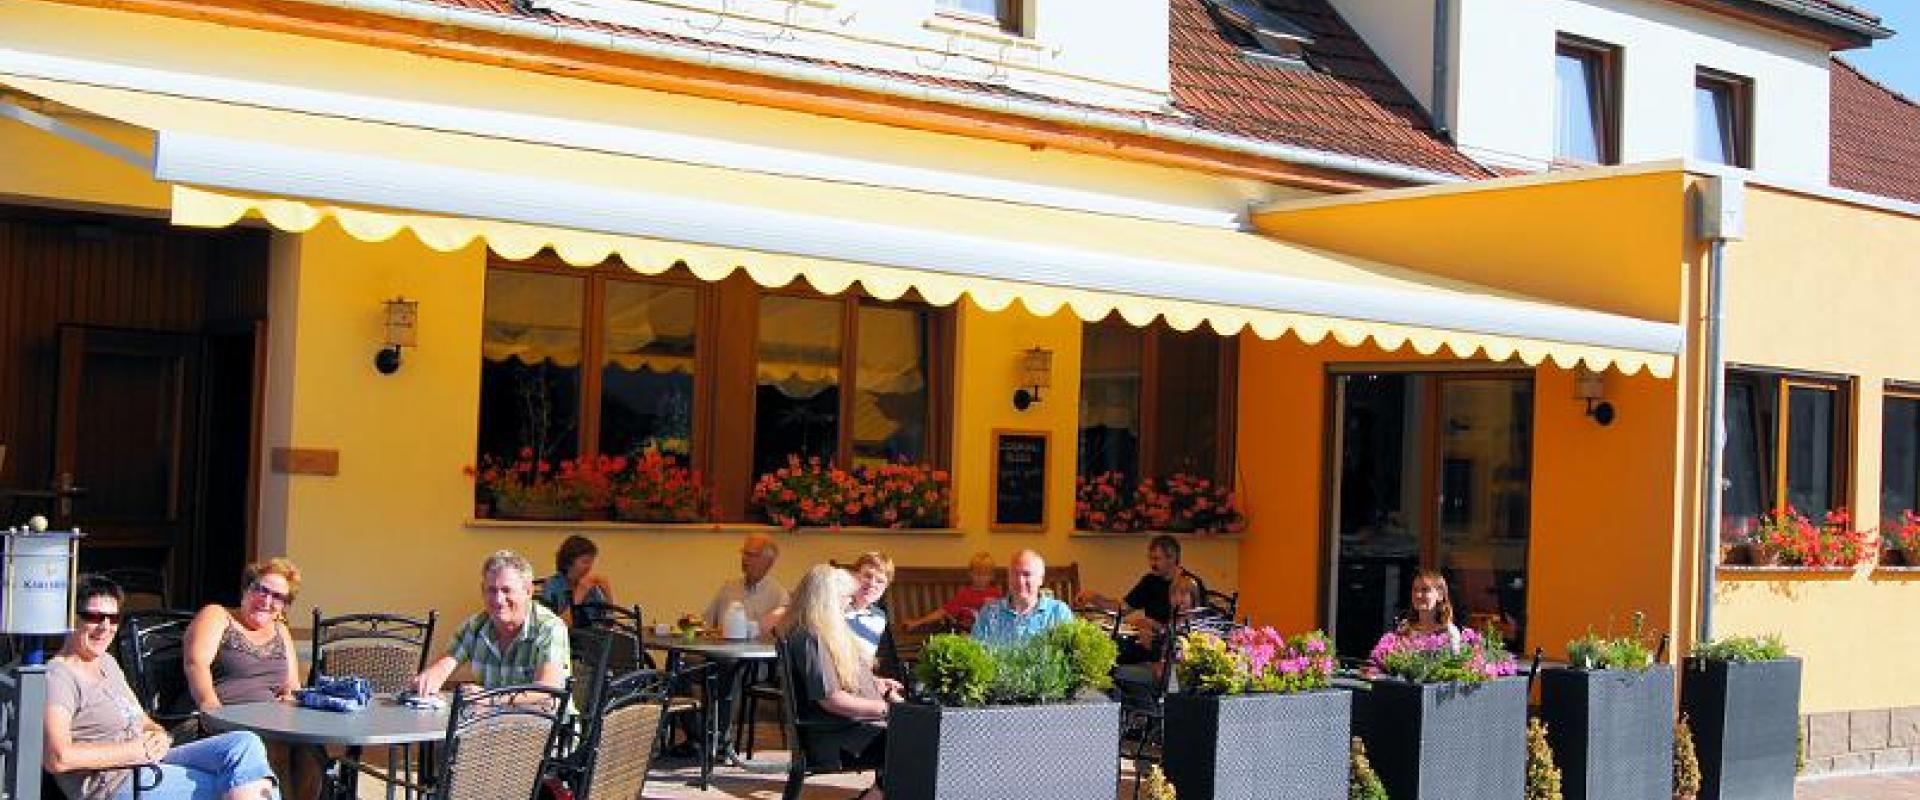 16335 Motorrad Hotel Laux im Saarland.jpg